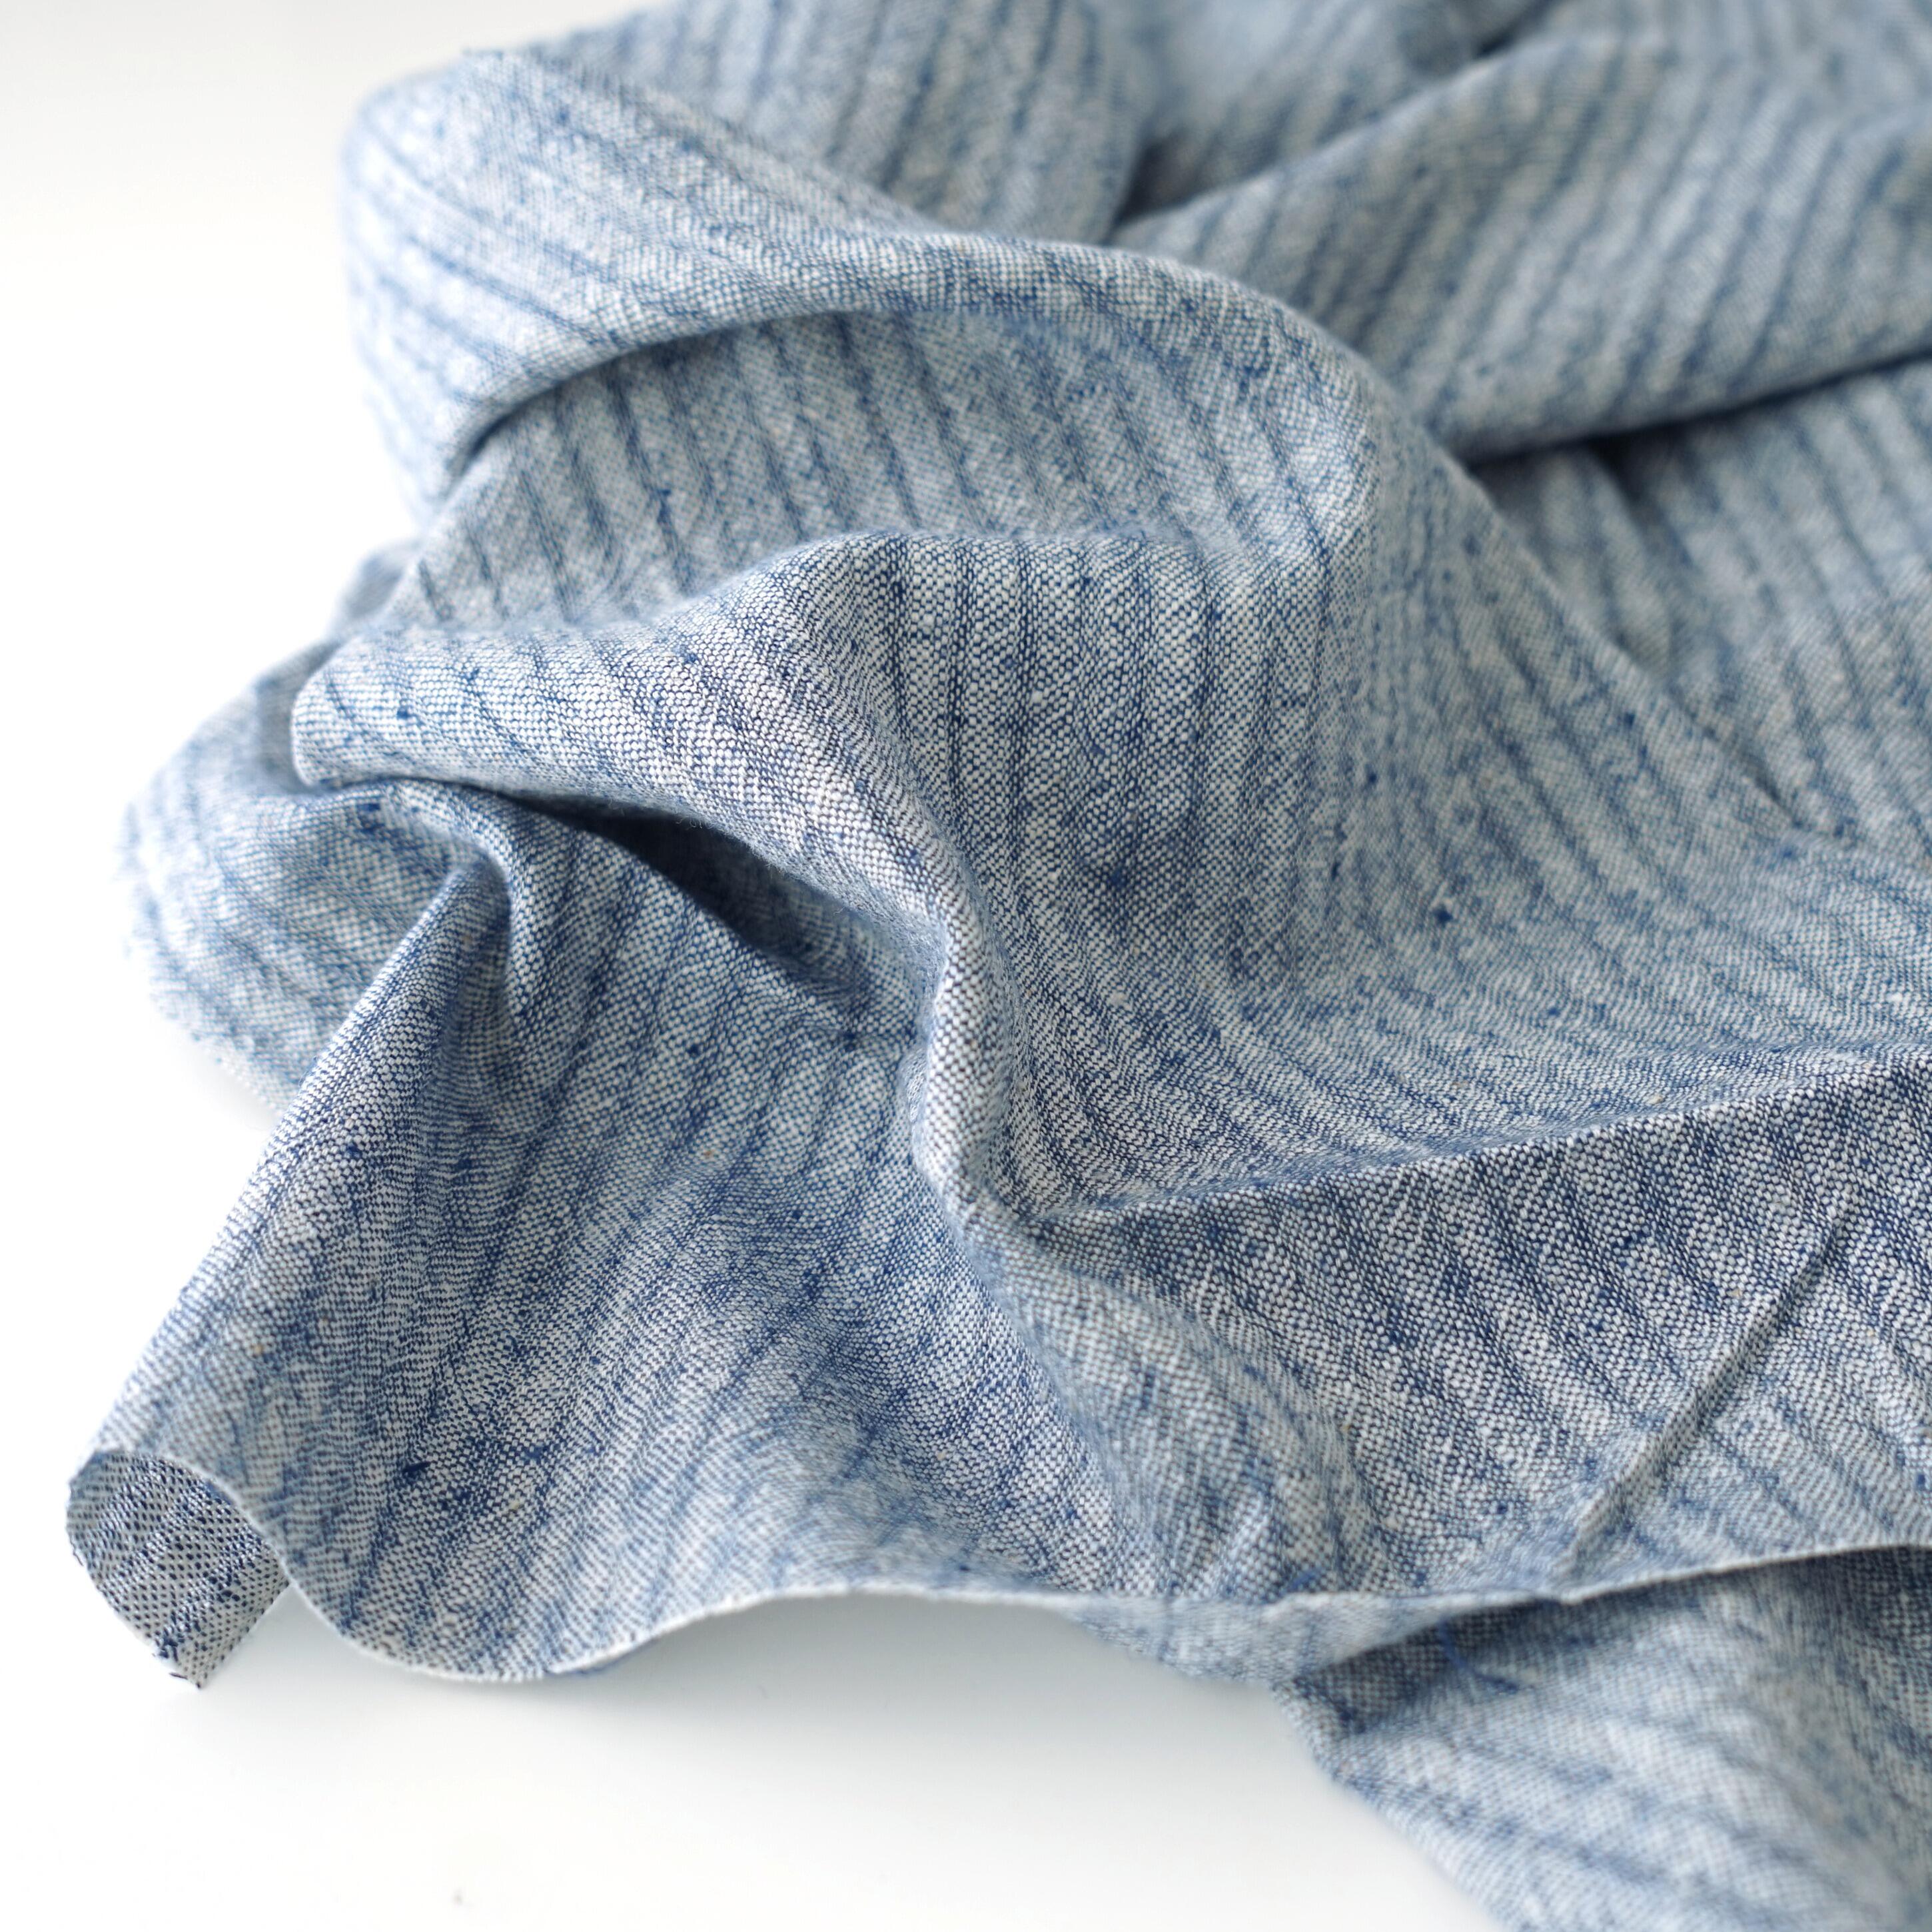 RAM02 - Organic Kala Cotton - Handloom Woven -  Single & Double Warp, Single Weft - Striped - Blue Yarn-Dyed Weft - Reactive Dye - Shot Cotton - Cross Colour - Contrast